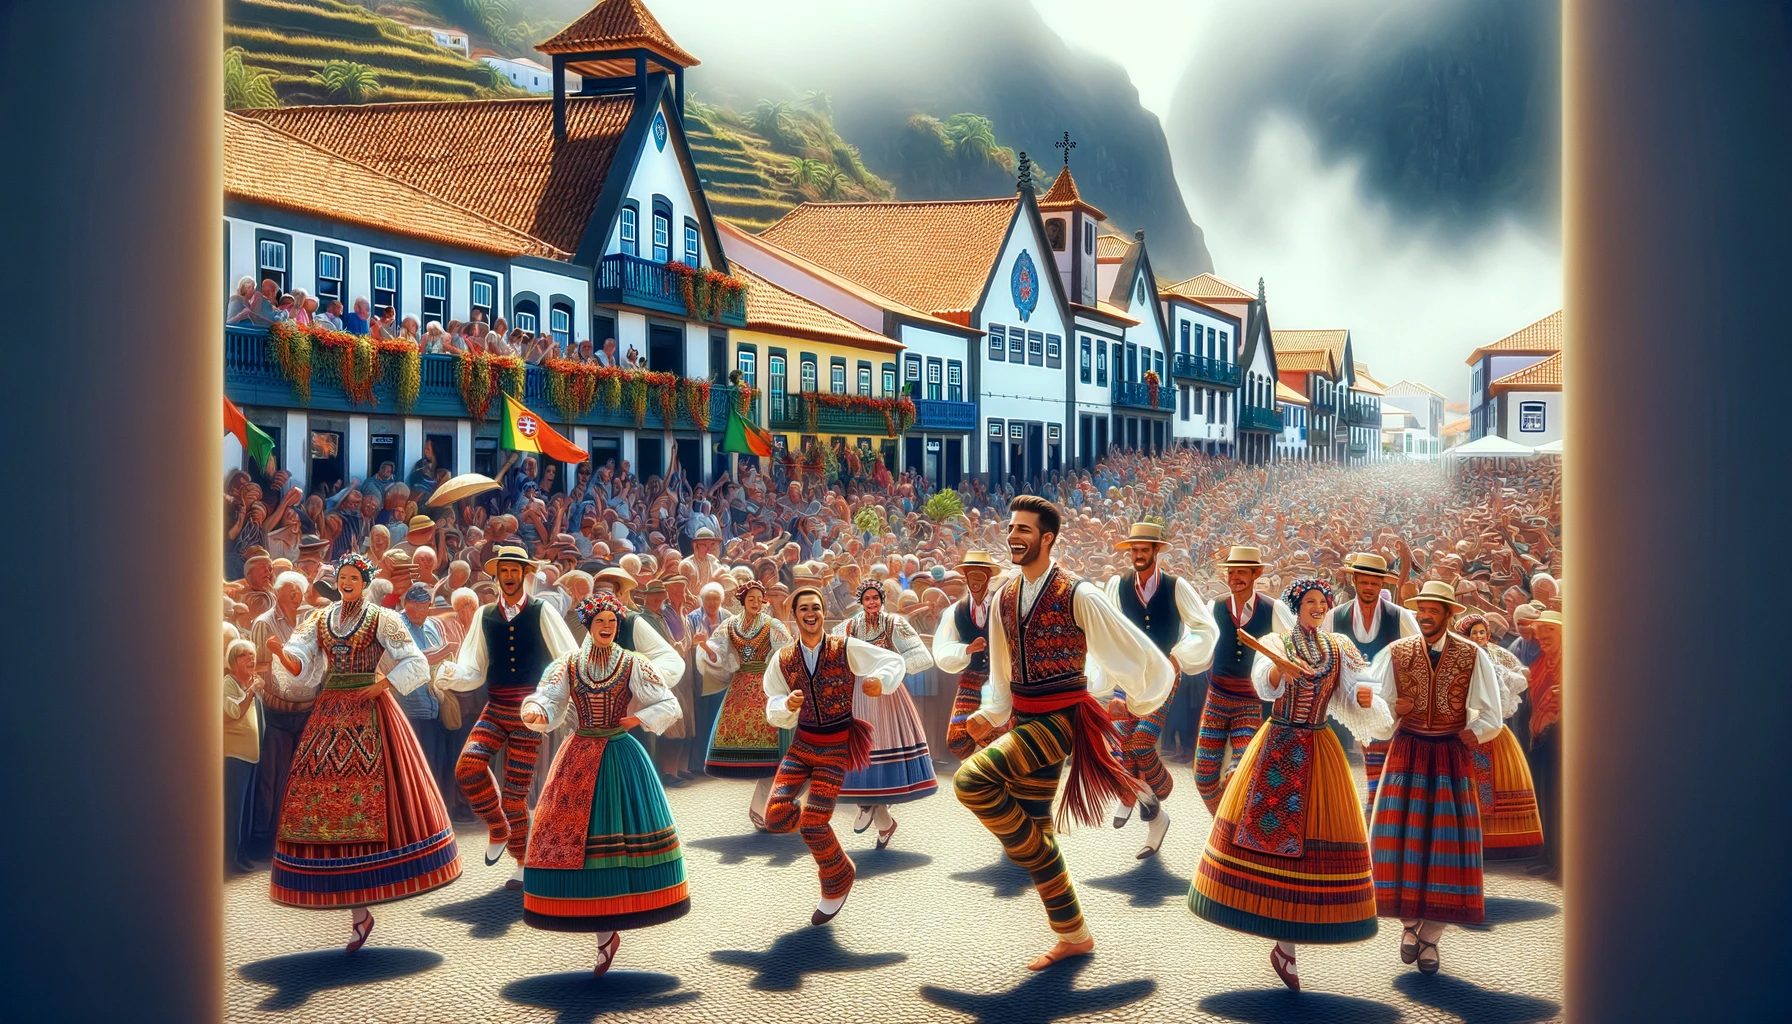 Folk dancers in traditional costumes at festival celebration.